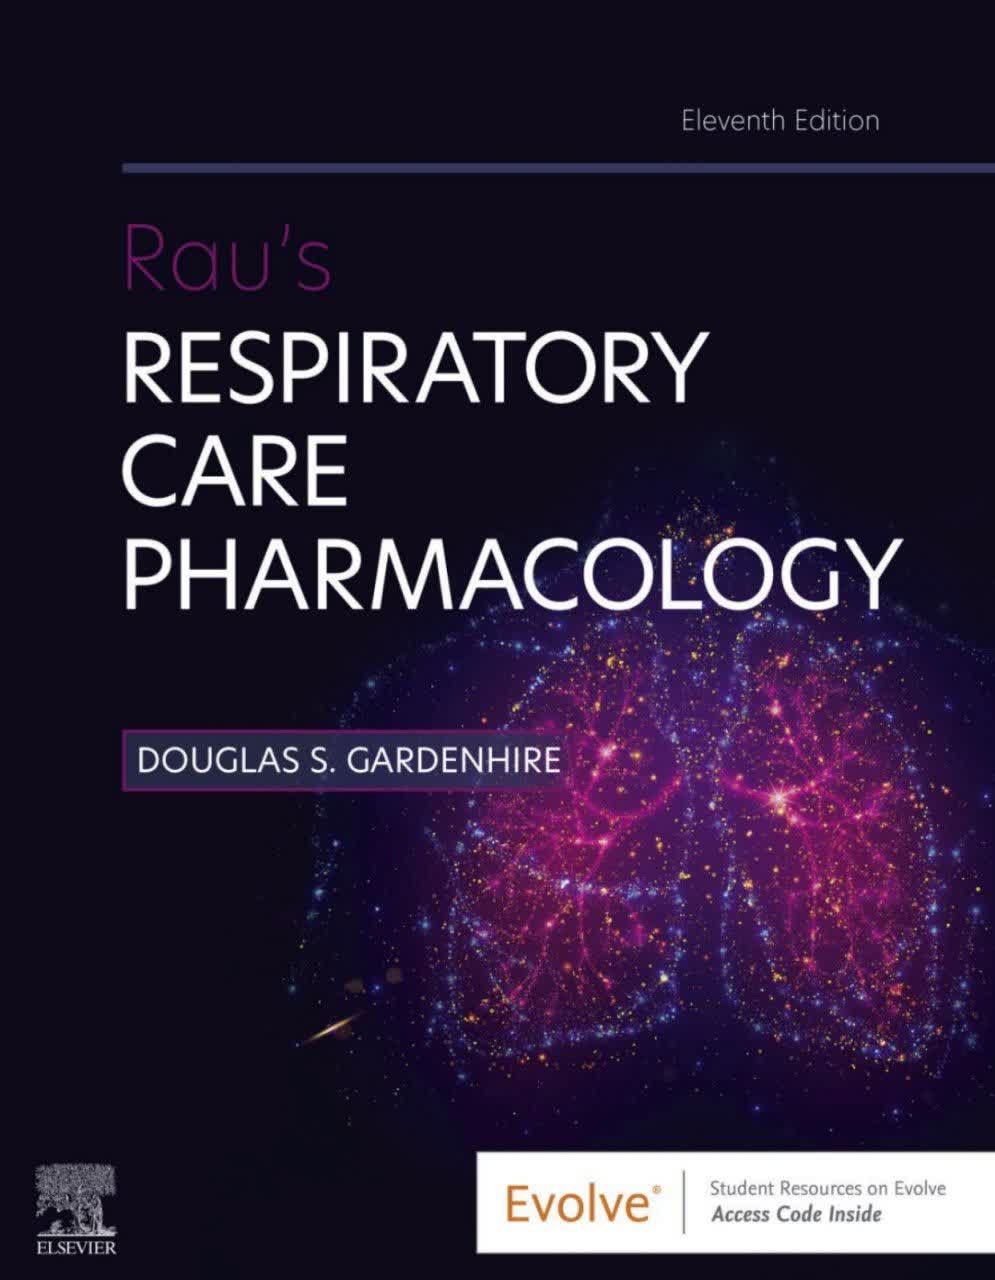 Rau’s Respiratory Care Pharmacology ELEVENTH EDITION